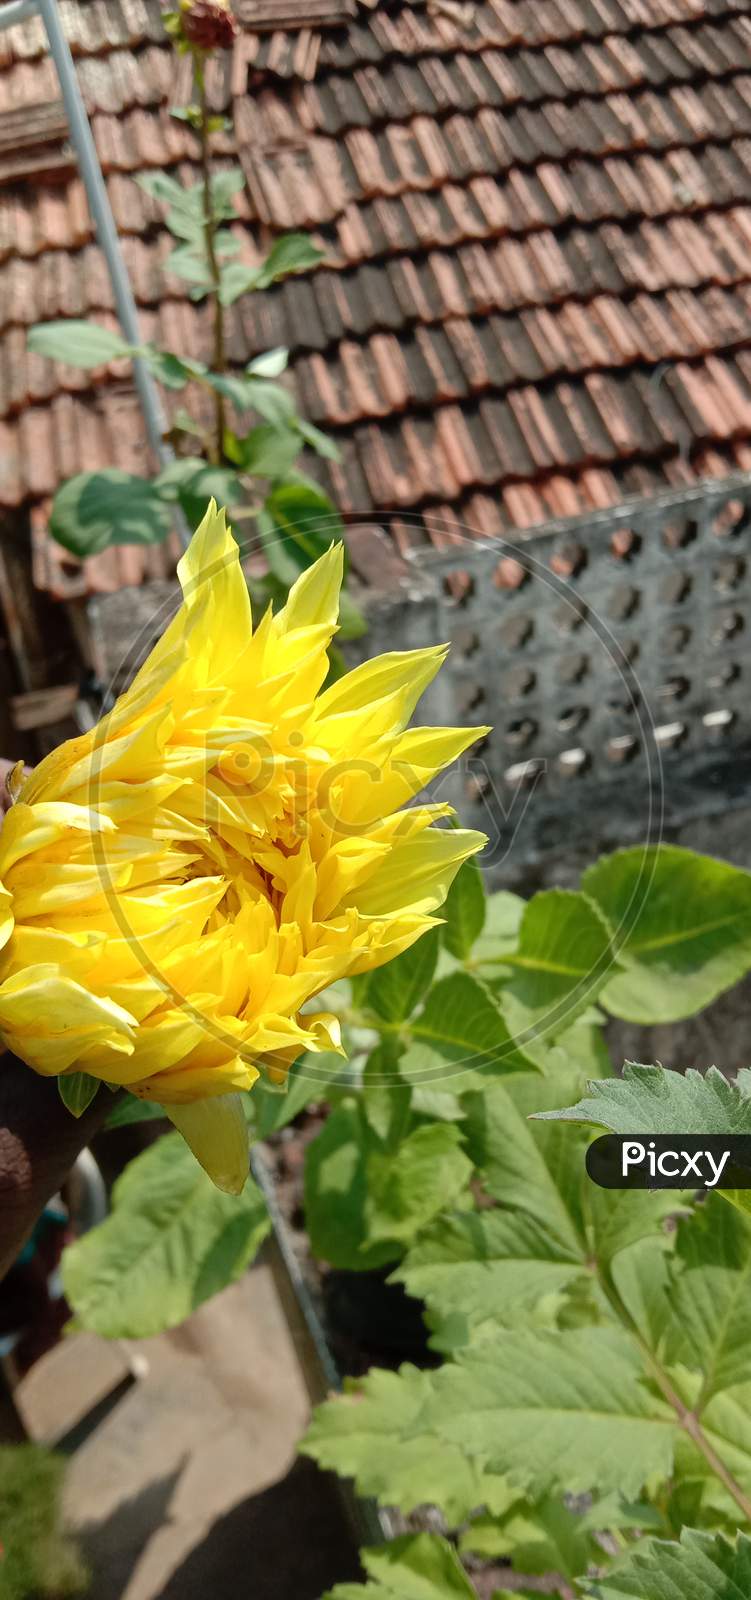 Yellow Flower in the garden